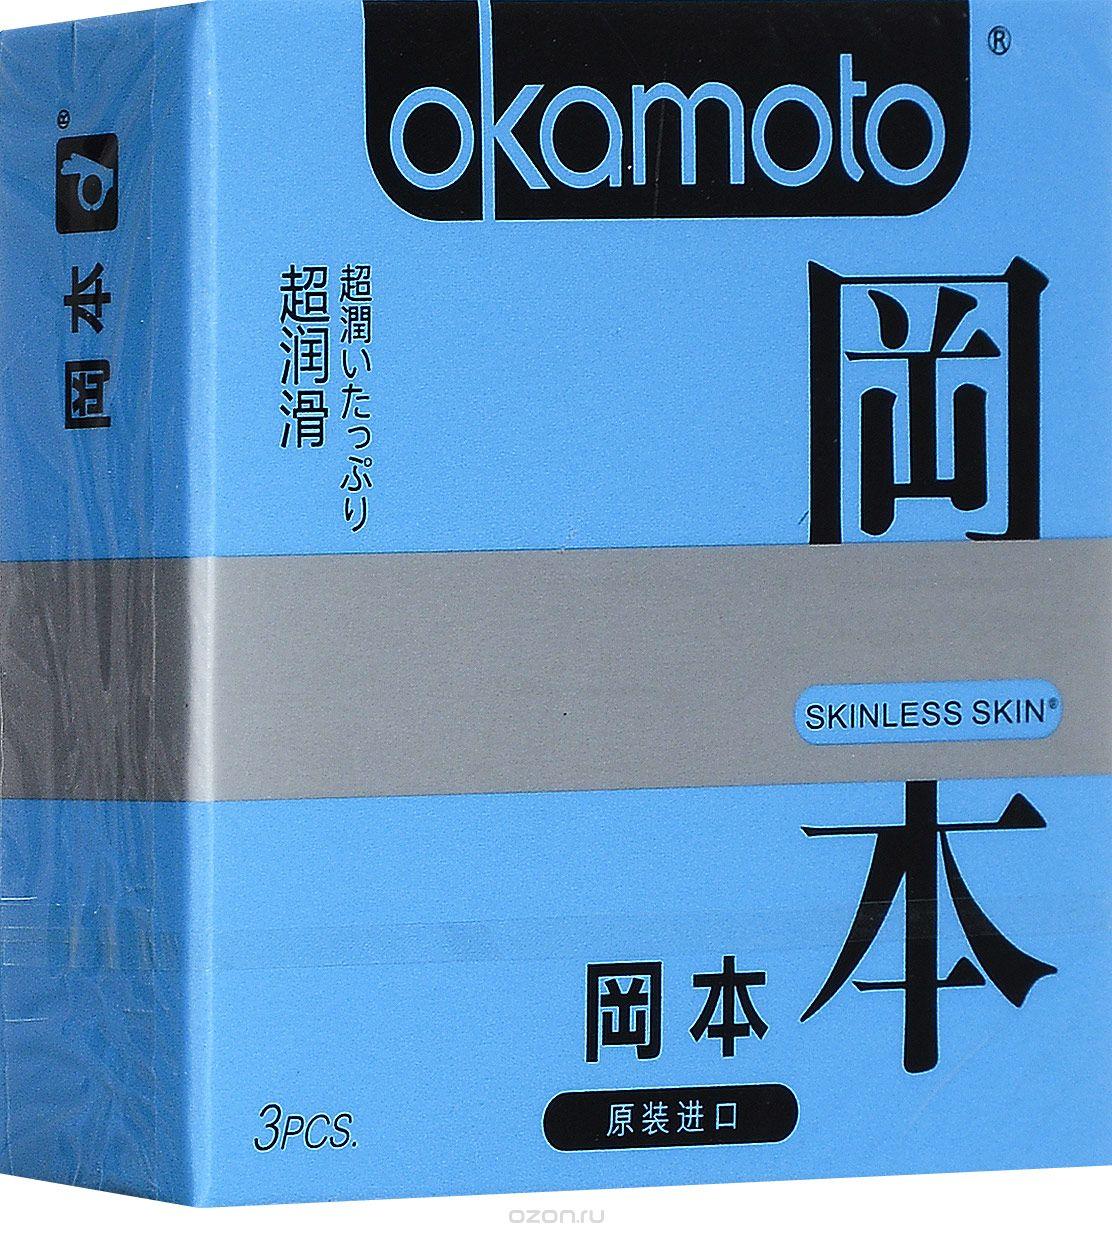 ПРЕЗЕРВАТИВЫ "OKAMOTO SKINLESS SKIN" SUPER LUBRICATIVE №3 (с двойной смазкой)